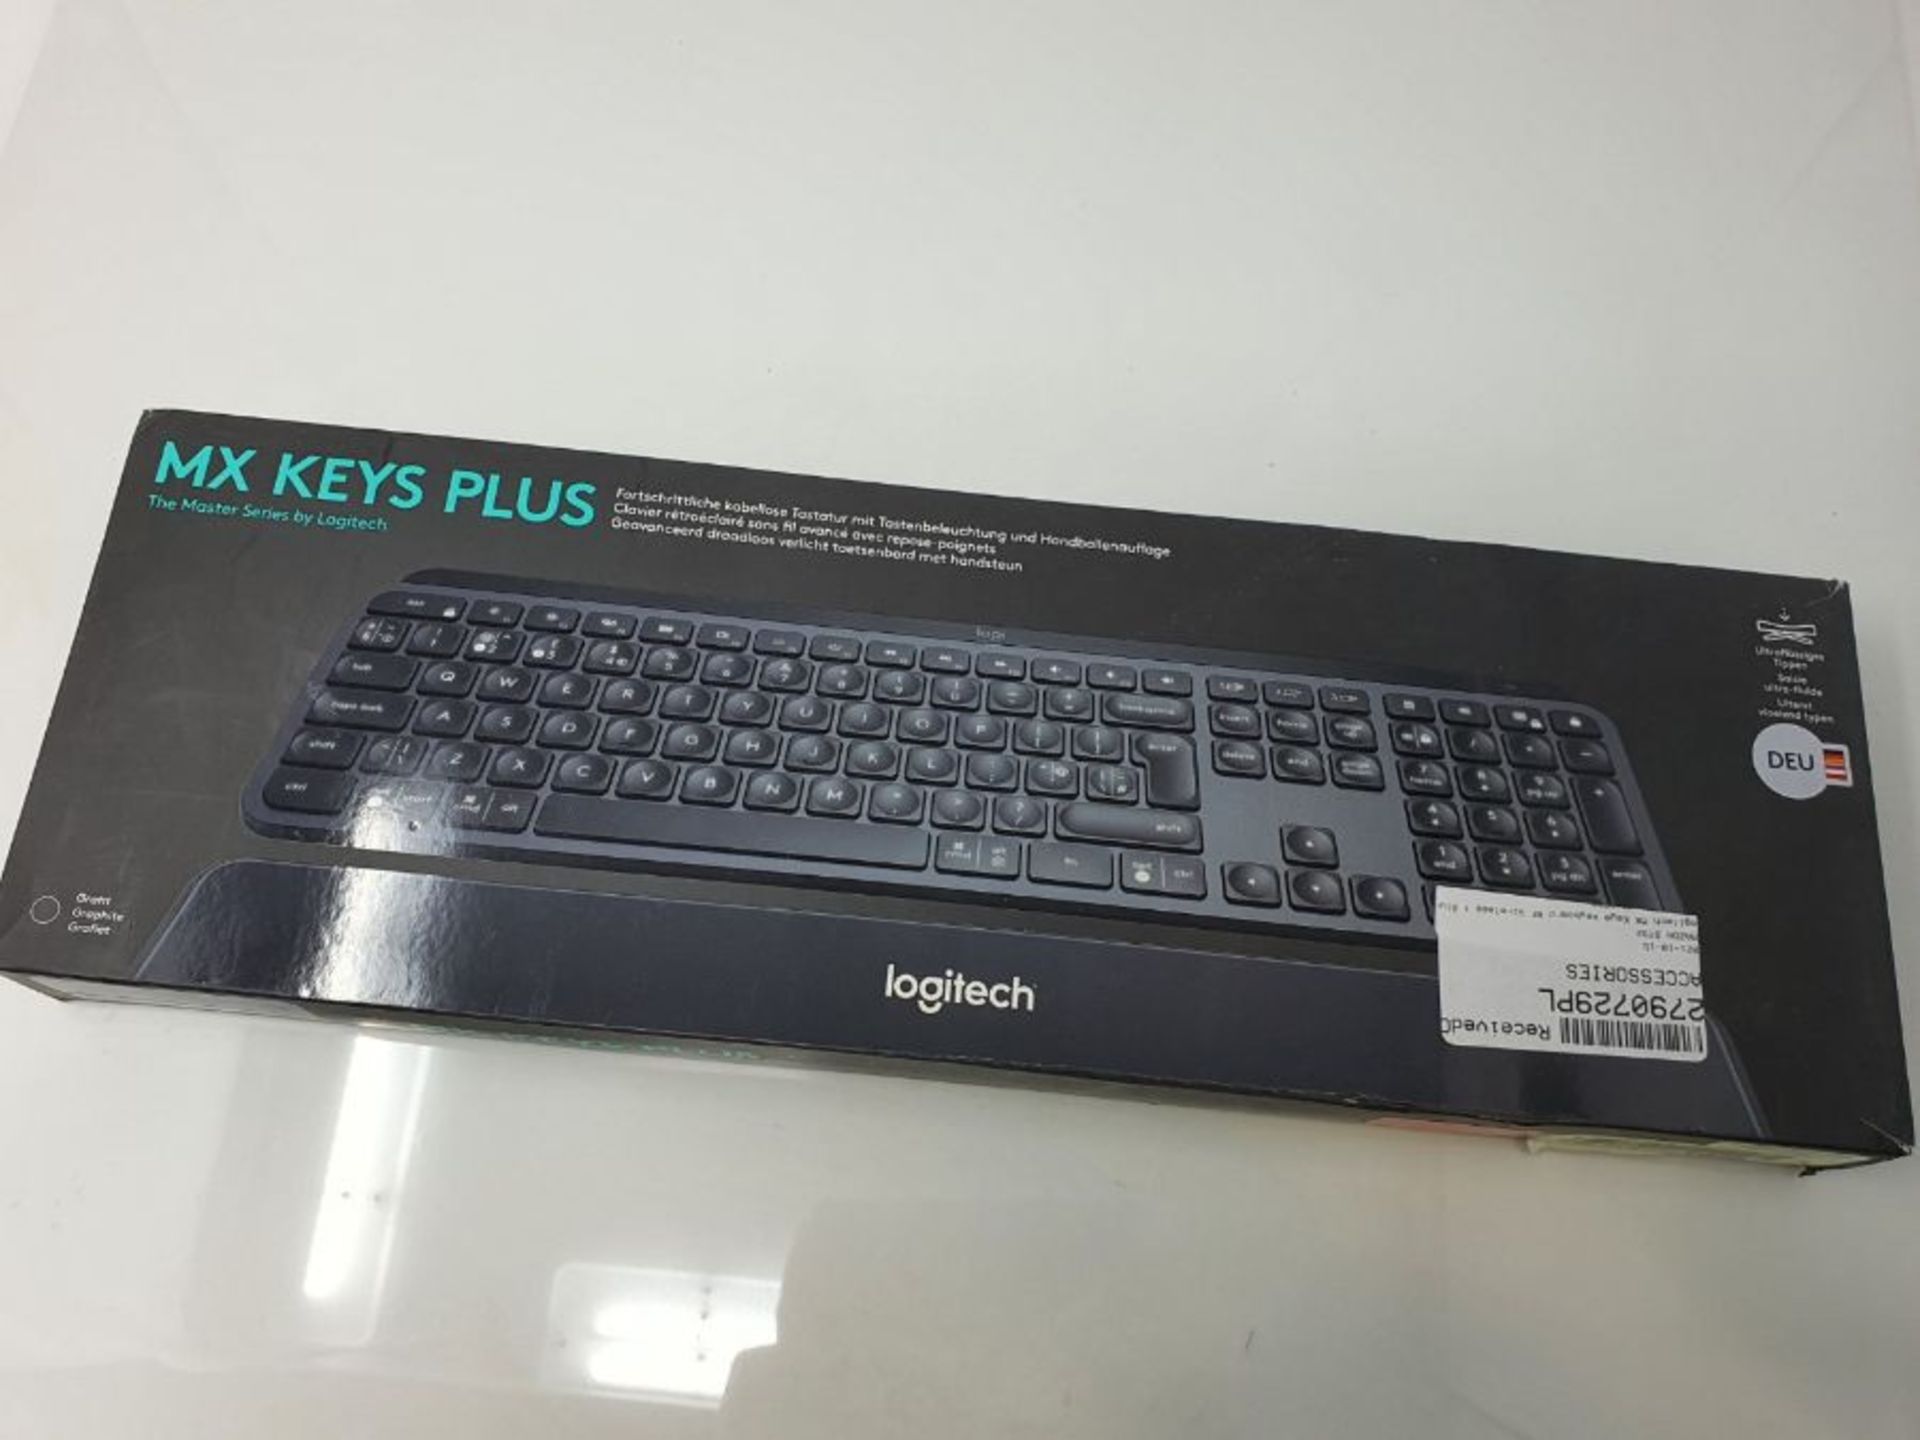 RRP £86.00 Logitech MX Keys Plus Advanced Wireless Illuminated Keyboard with Palm Rest, QWERTZ Ge - Image 2 of 3